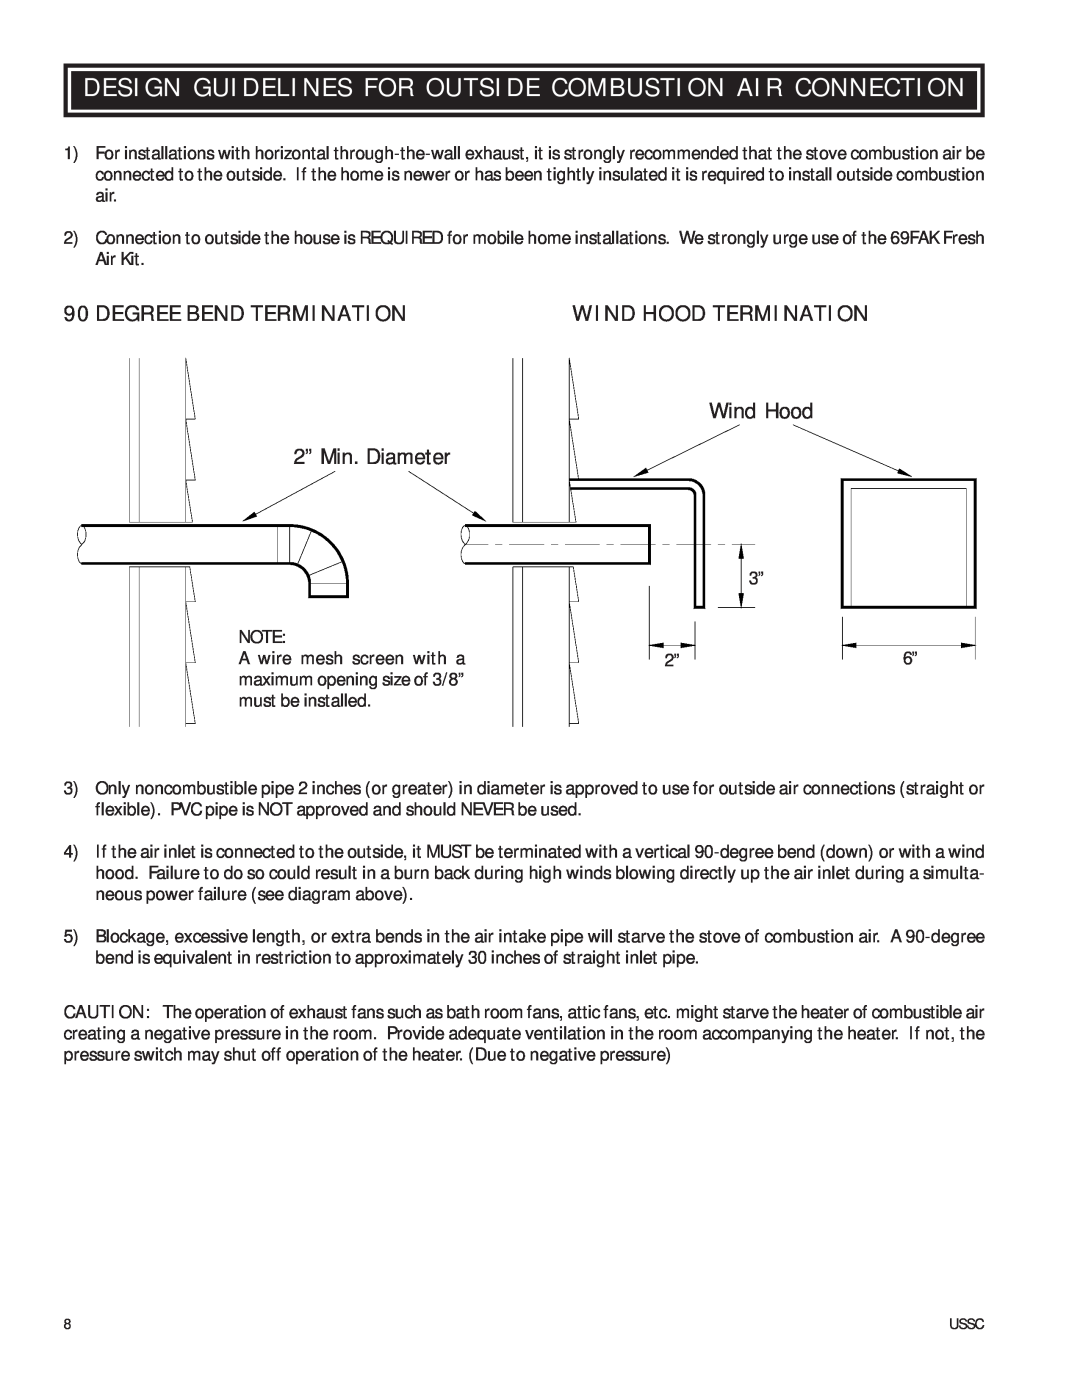 United States Stove 6039HF owner manual Degree Bend Termination, Wind Hood Termination, Wind Hood 2” Min. Diameter 